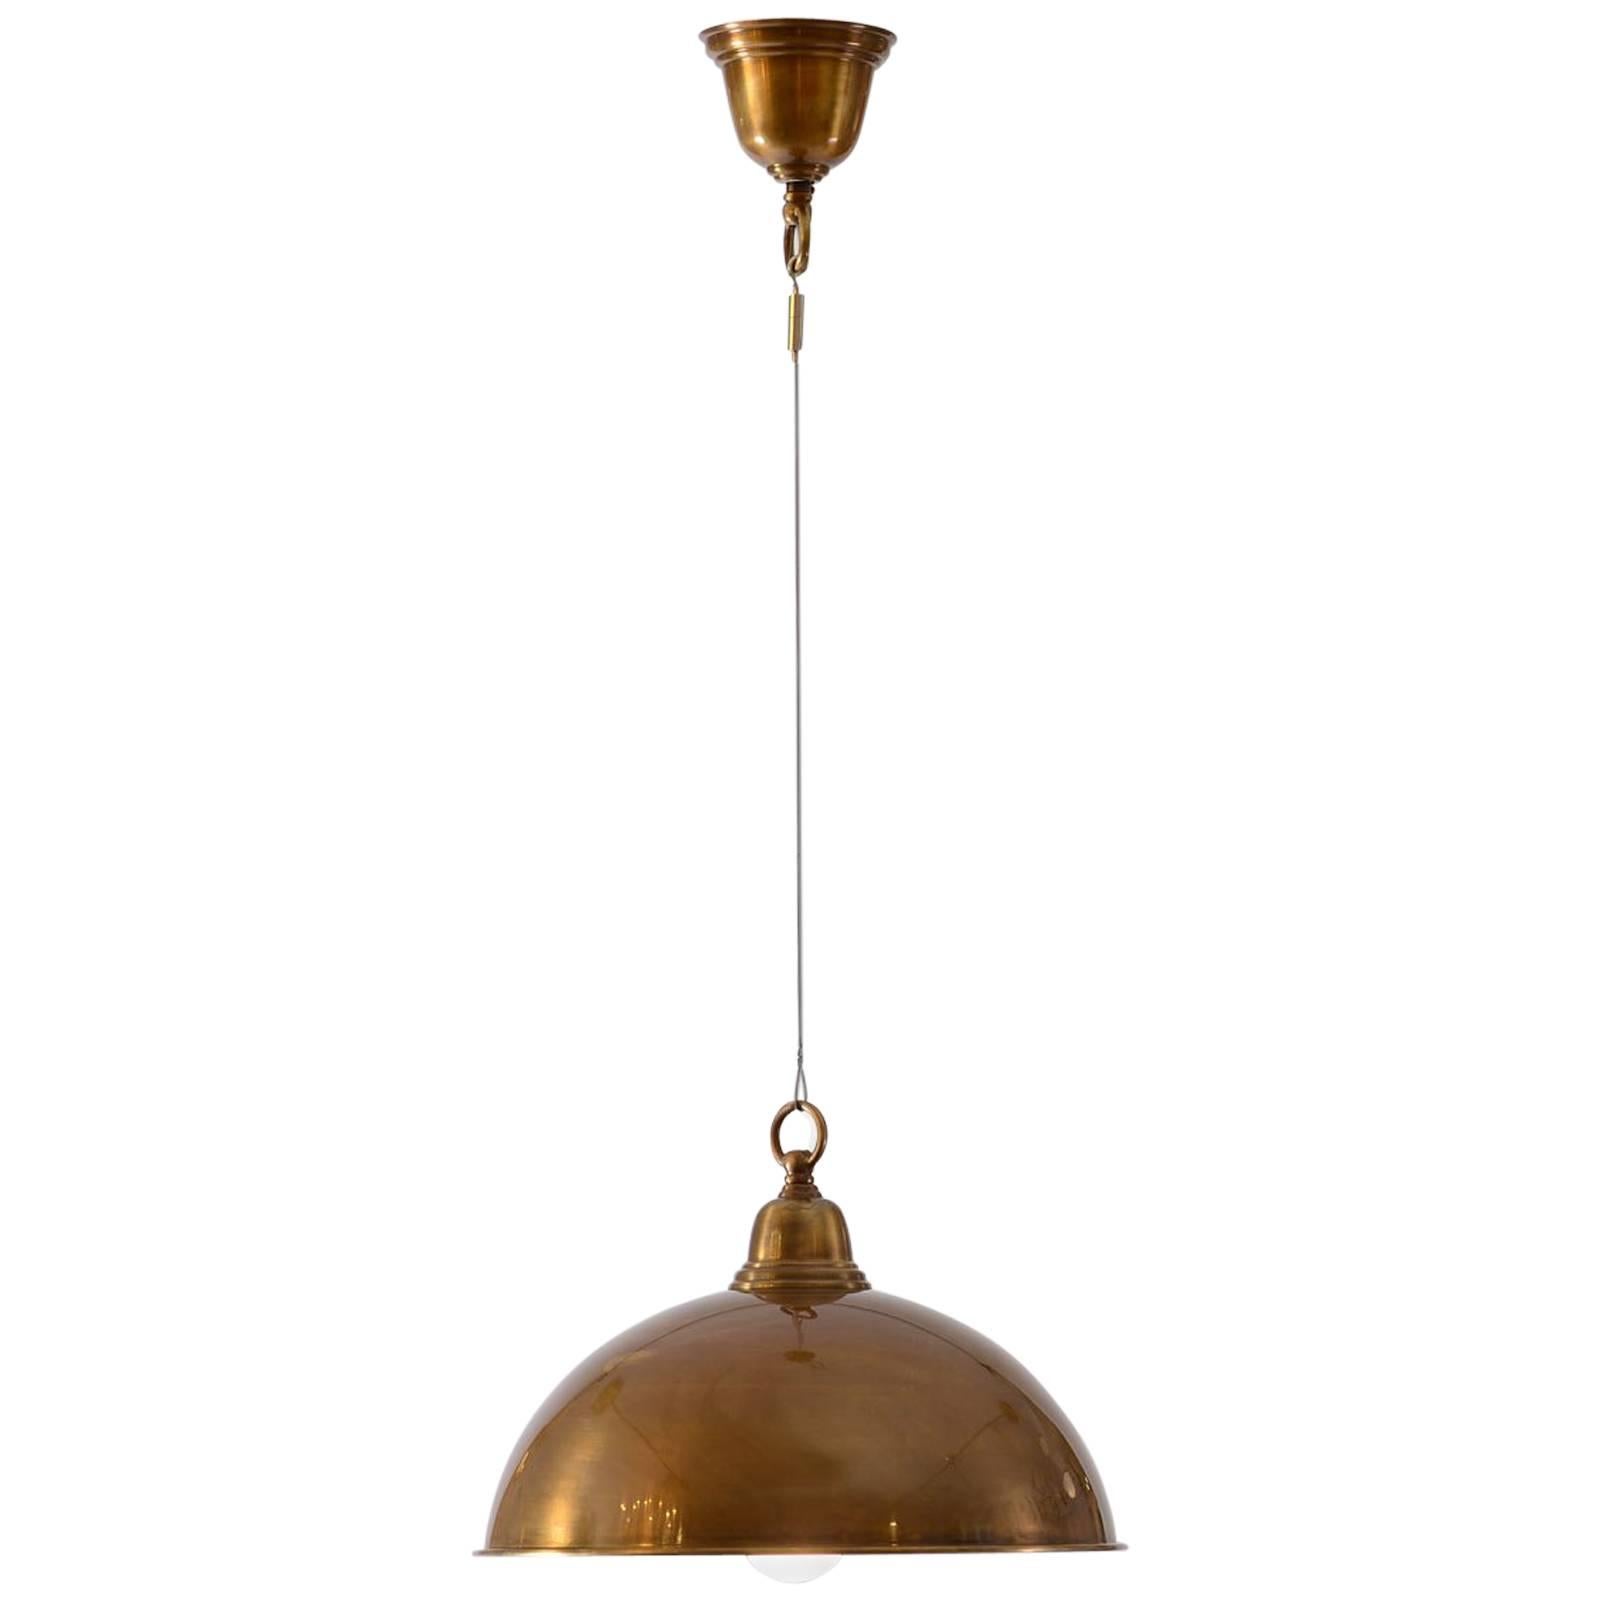 Adolf Loos "Looshaus" Vienna - Ceiling Lamp, Re-Edition 35DM